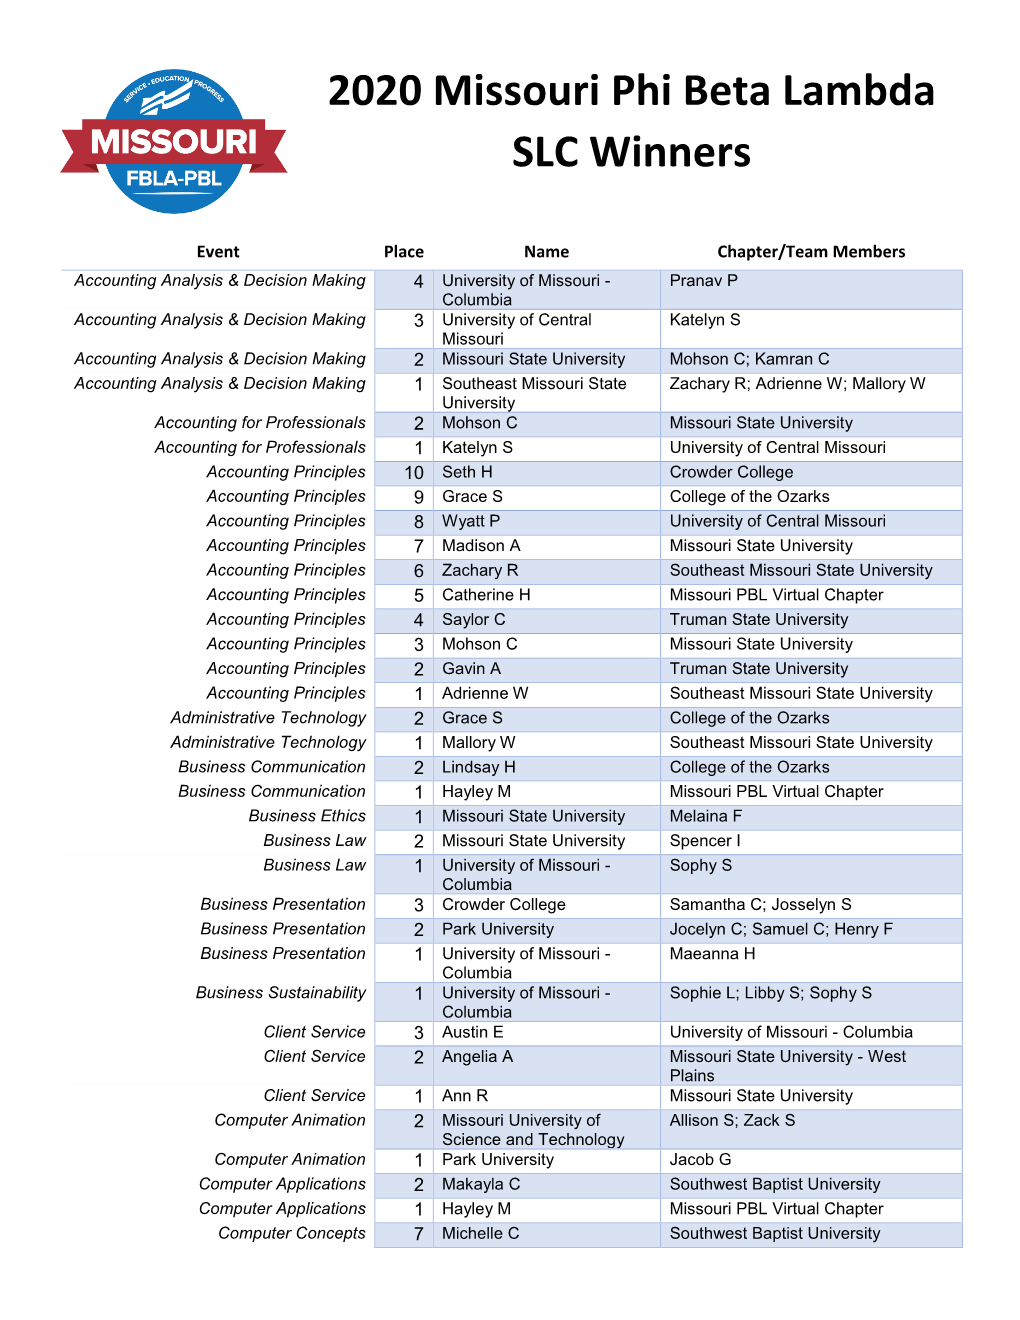 2020 Missouri Phi Beta Lambda SLC Winners